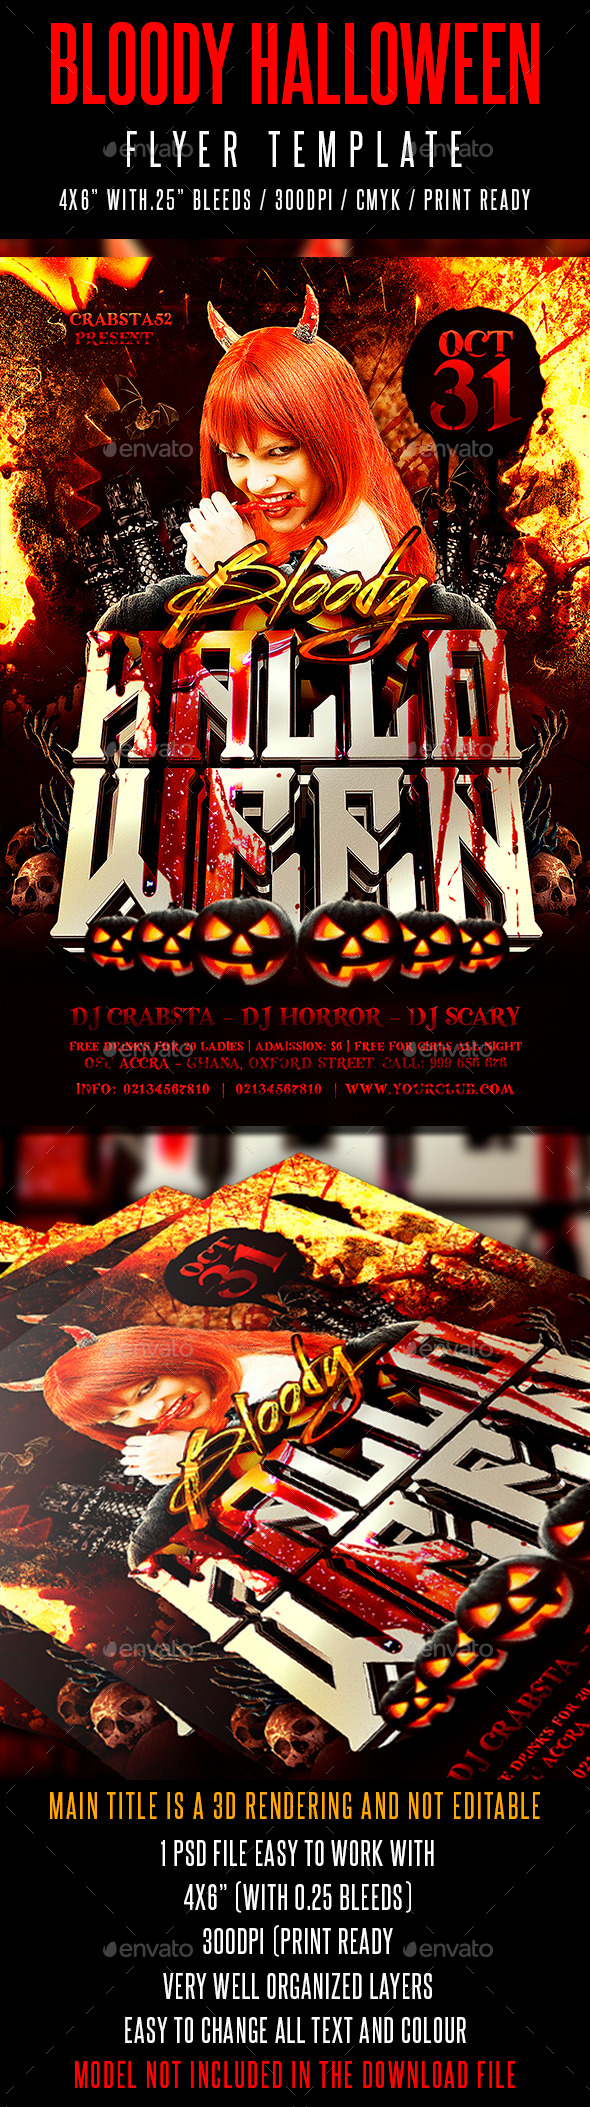 Bloody Halloween Flyer Template